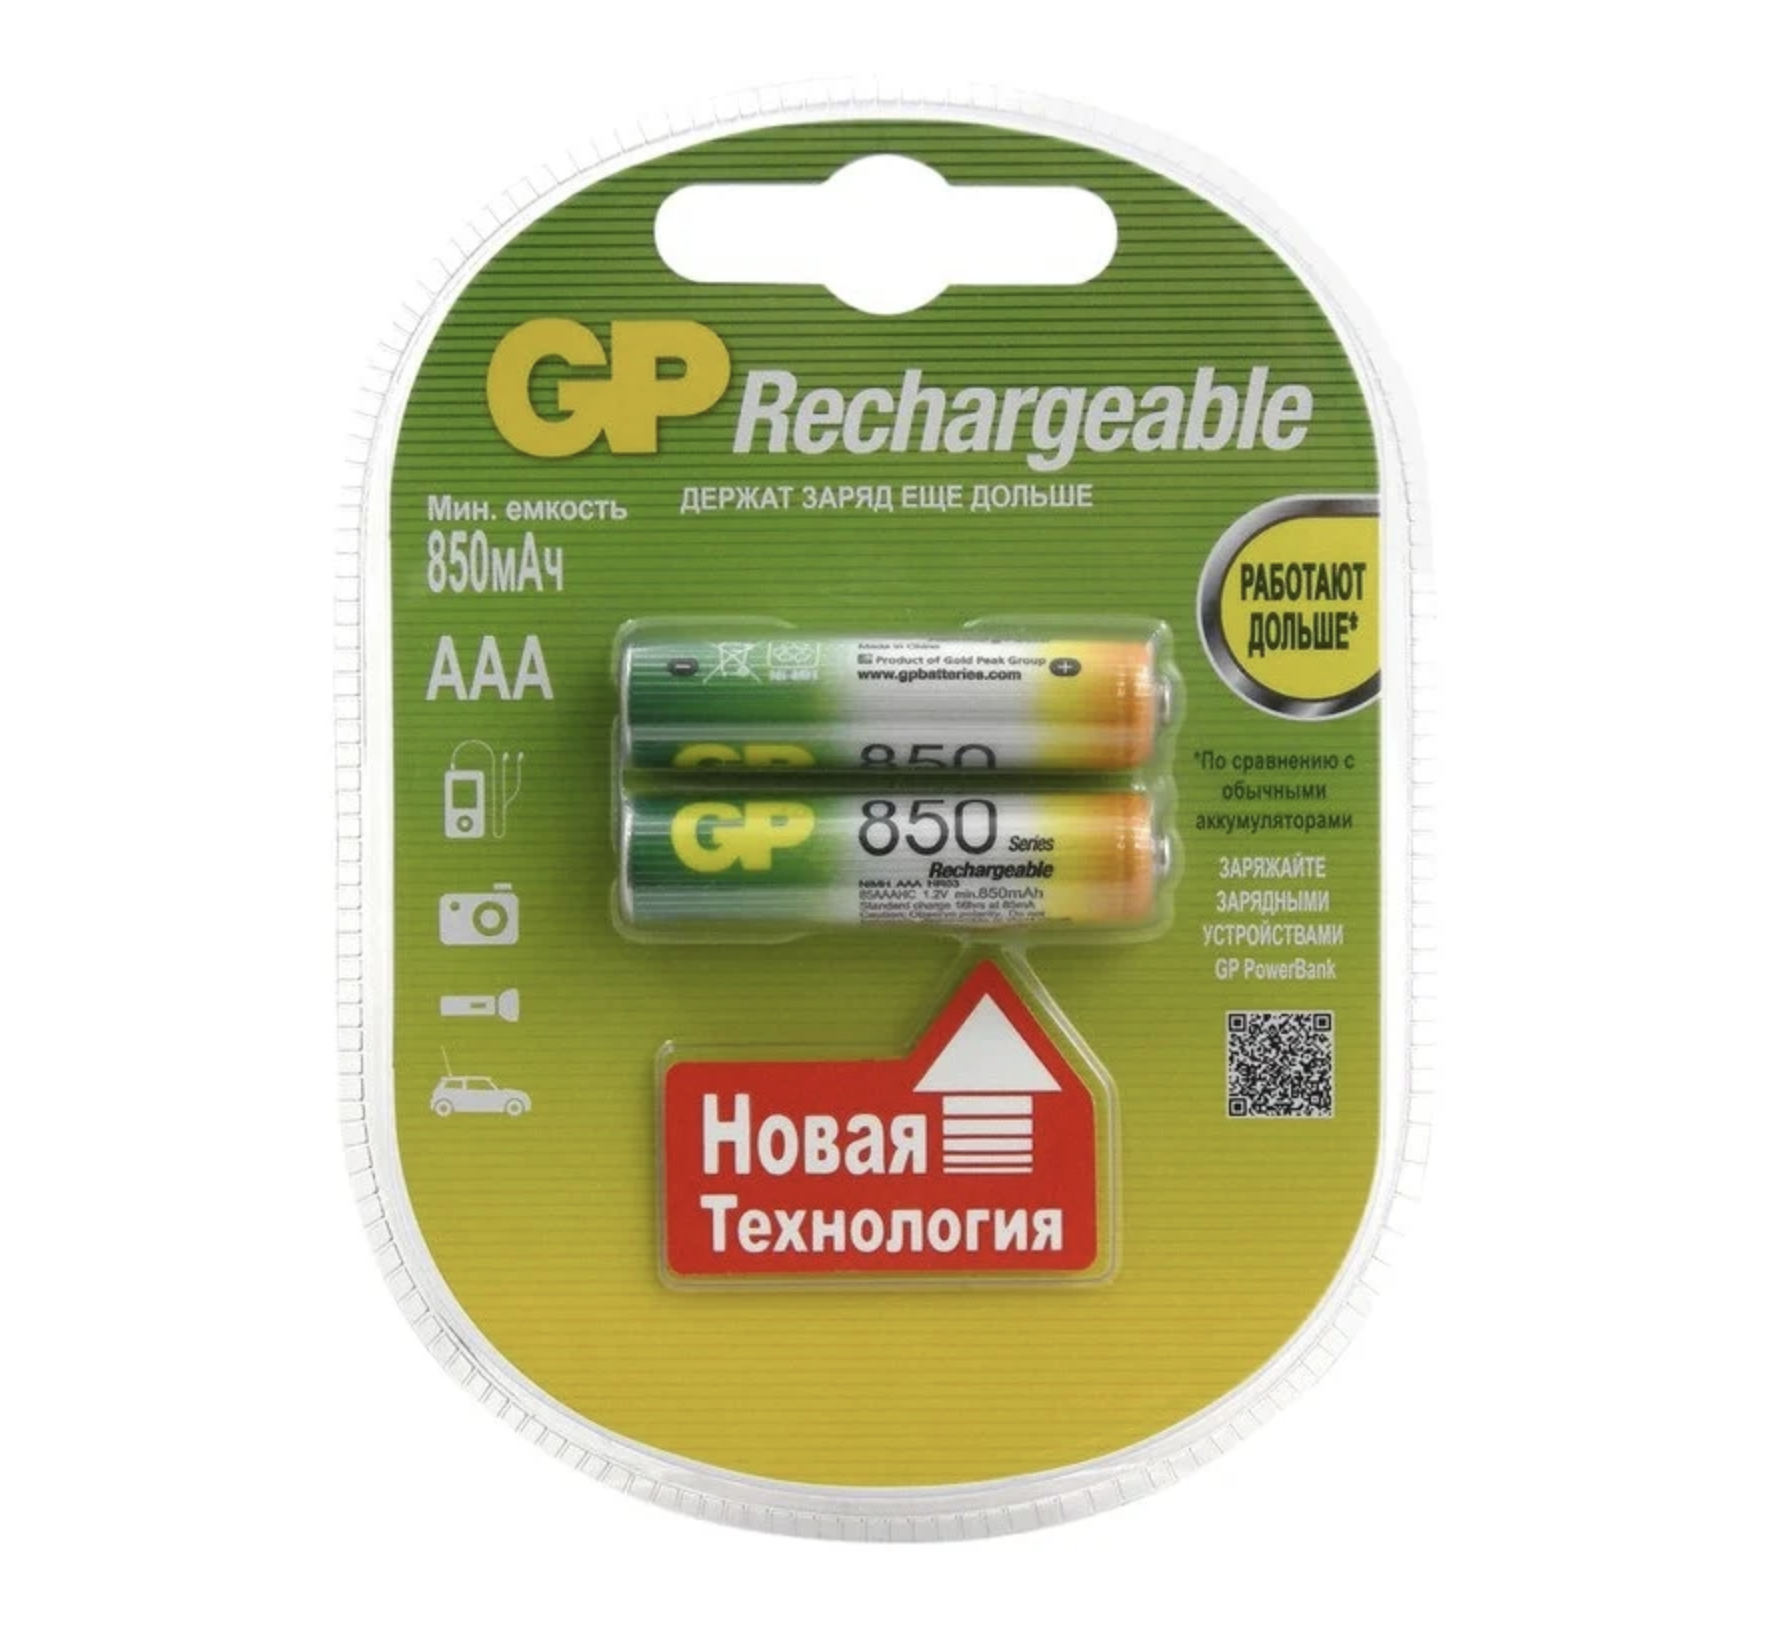  GP -  Rechargeable AAA 850 / 85AAAHC 2 